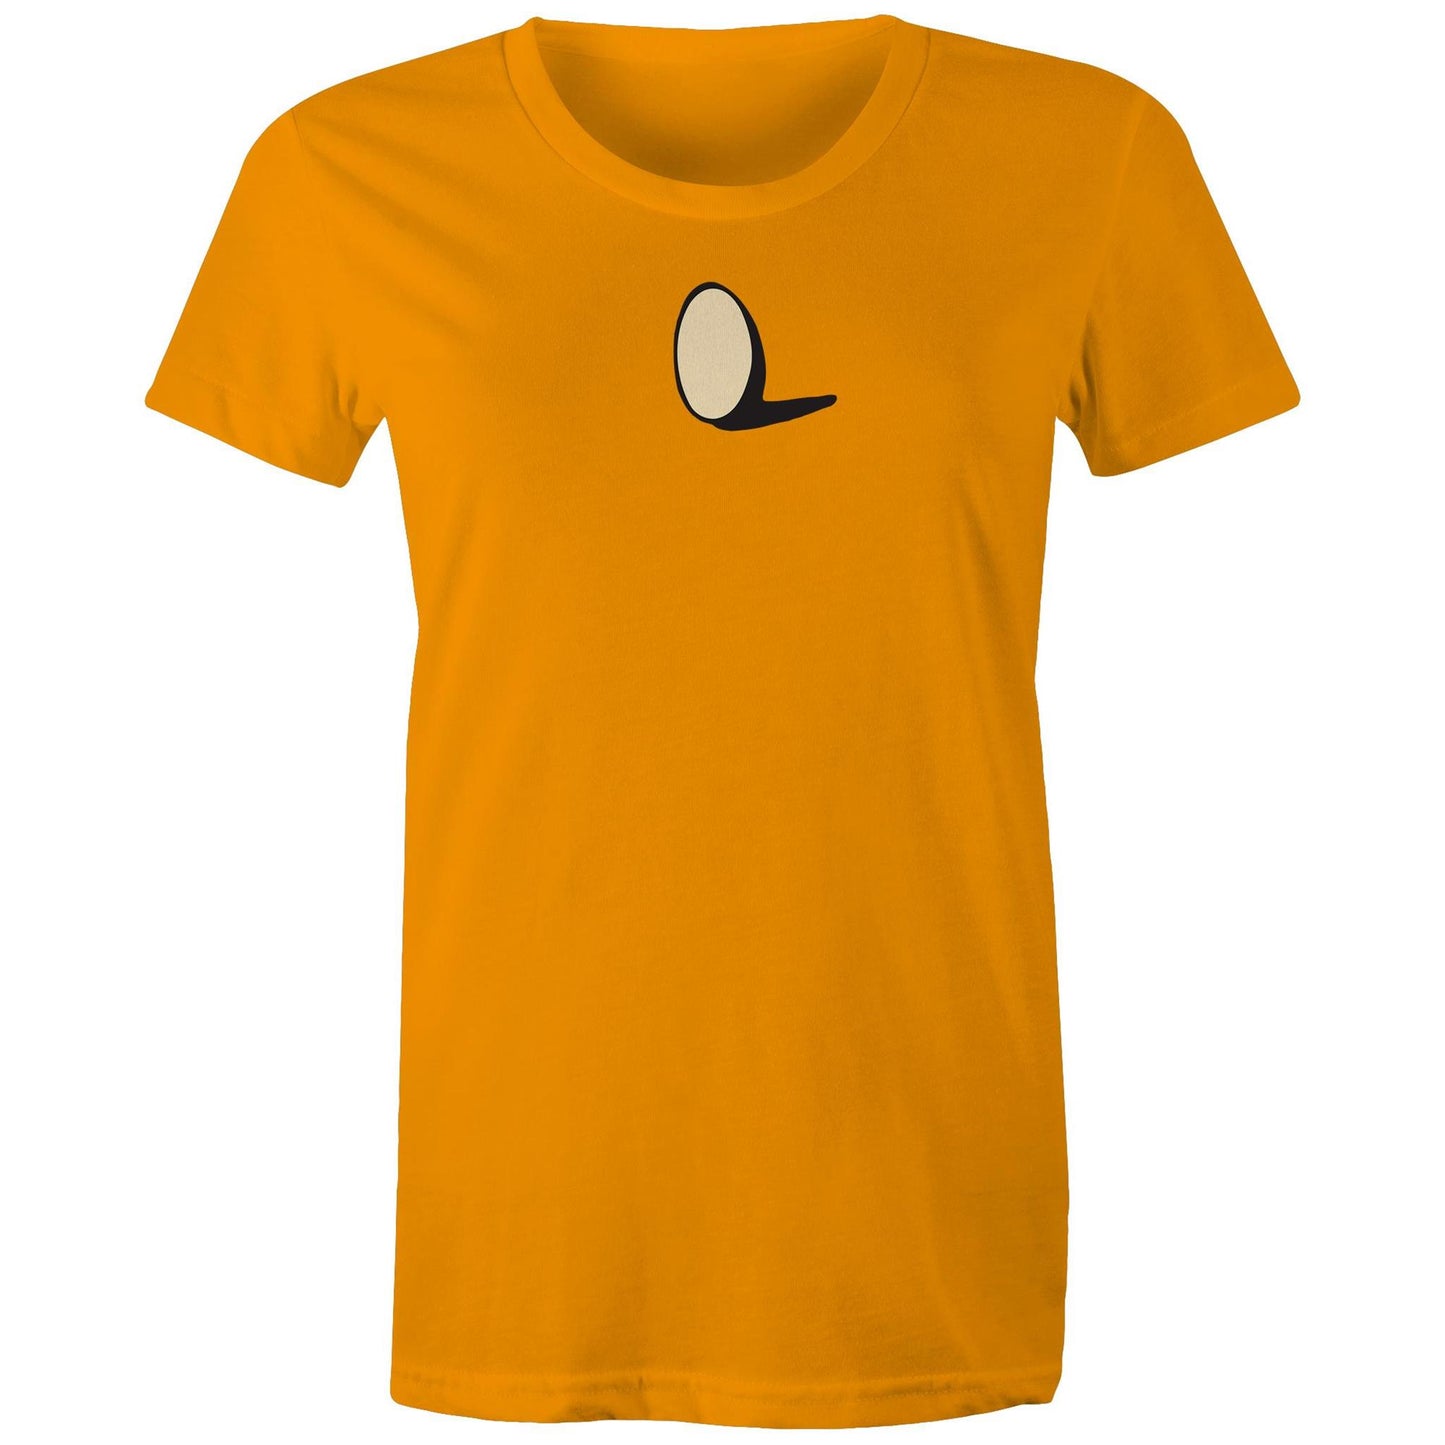 Egg T Shirts for Women